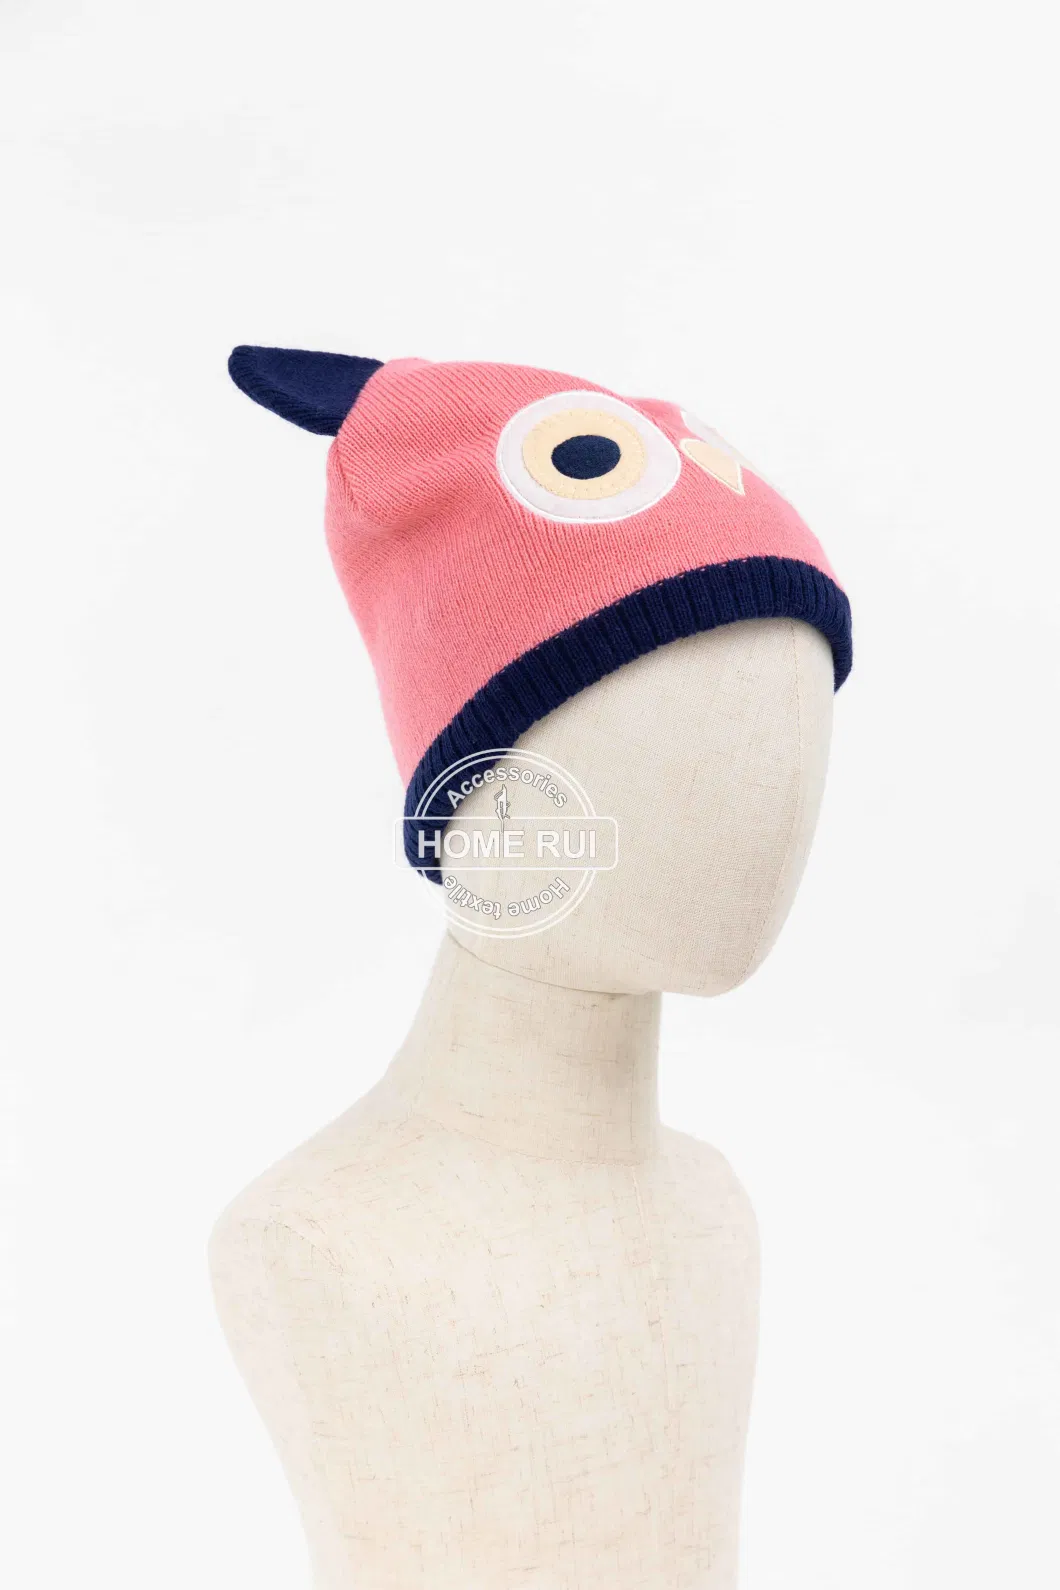 Boys Girls Warm Unisex Pink Lovely Child Animal Design Soft Two Ears Decorative Slouchy Beanie Tassel Bonnet Hat